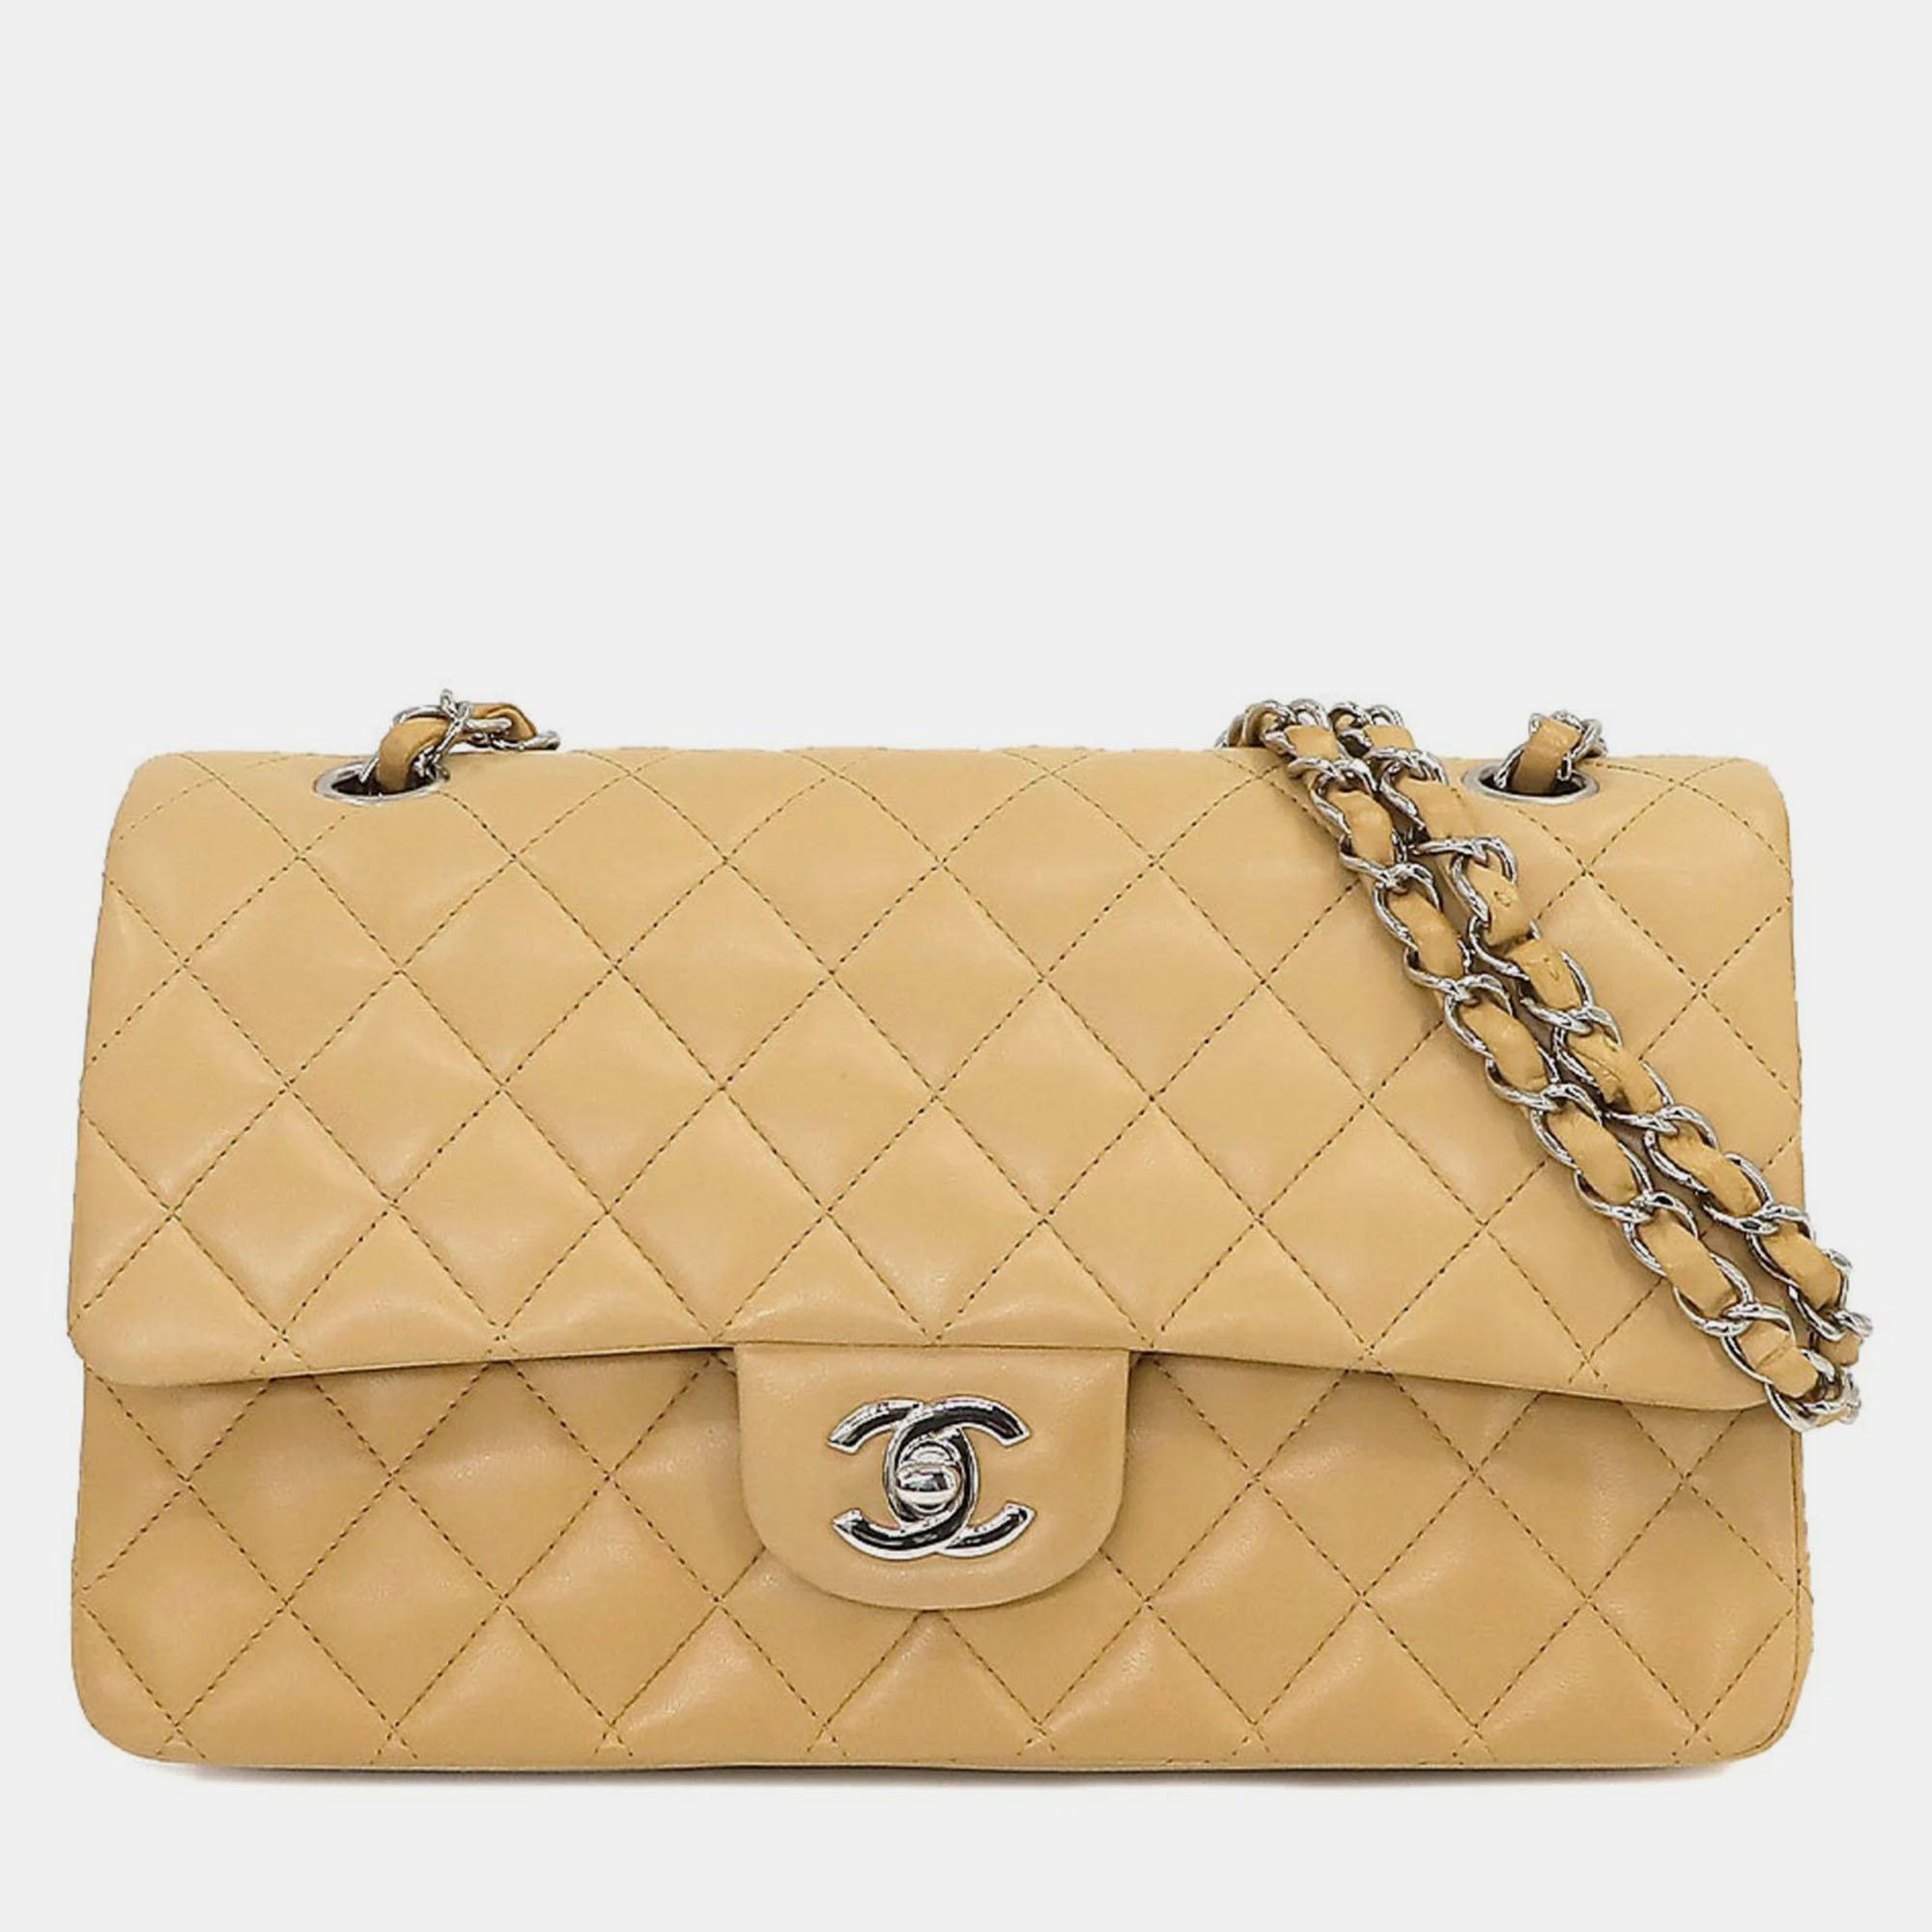 Chanel beige lambskin leather medium classic double flap shoulder bags